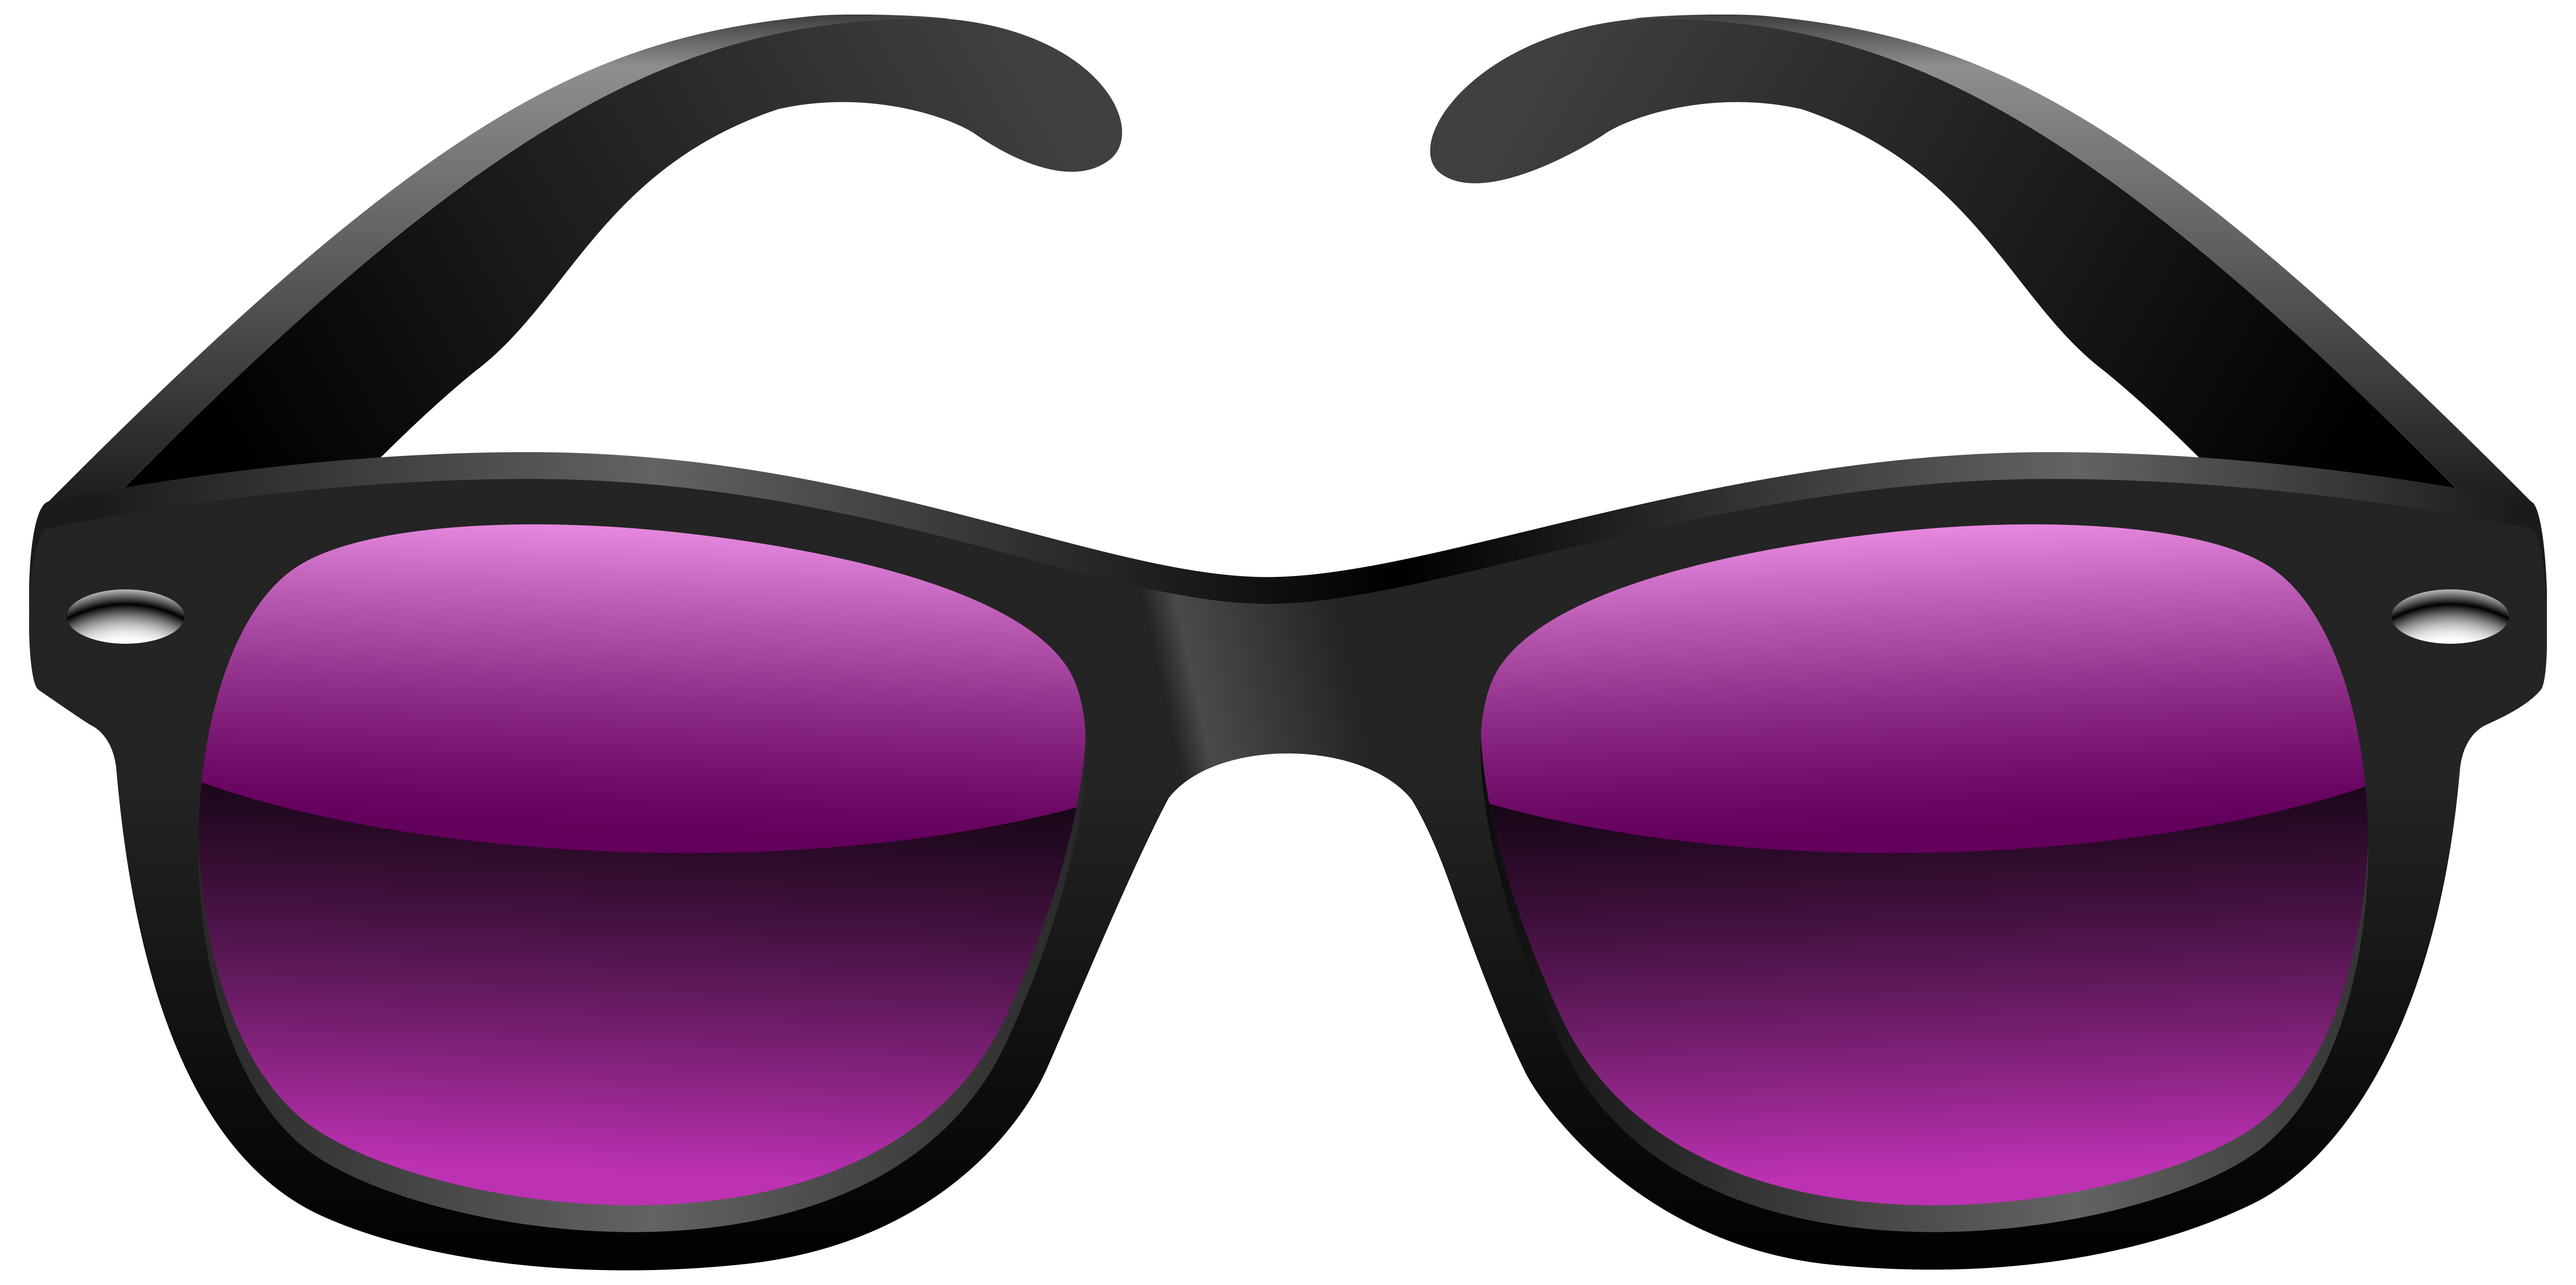 Sunglasses clipart stars and stripe. Black purple png image